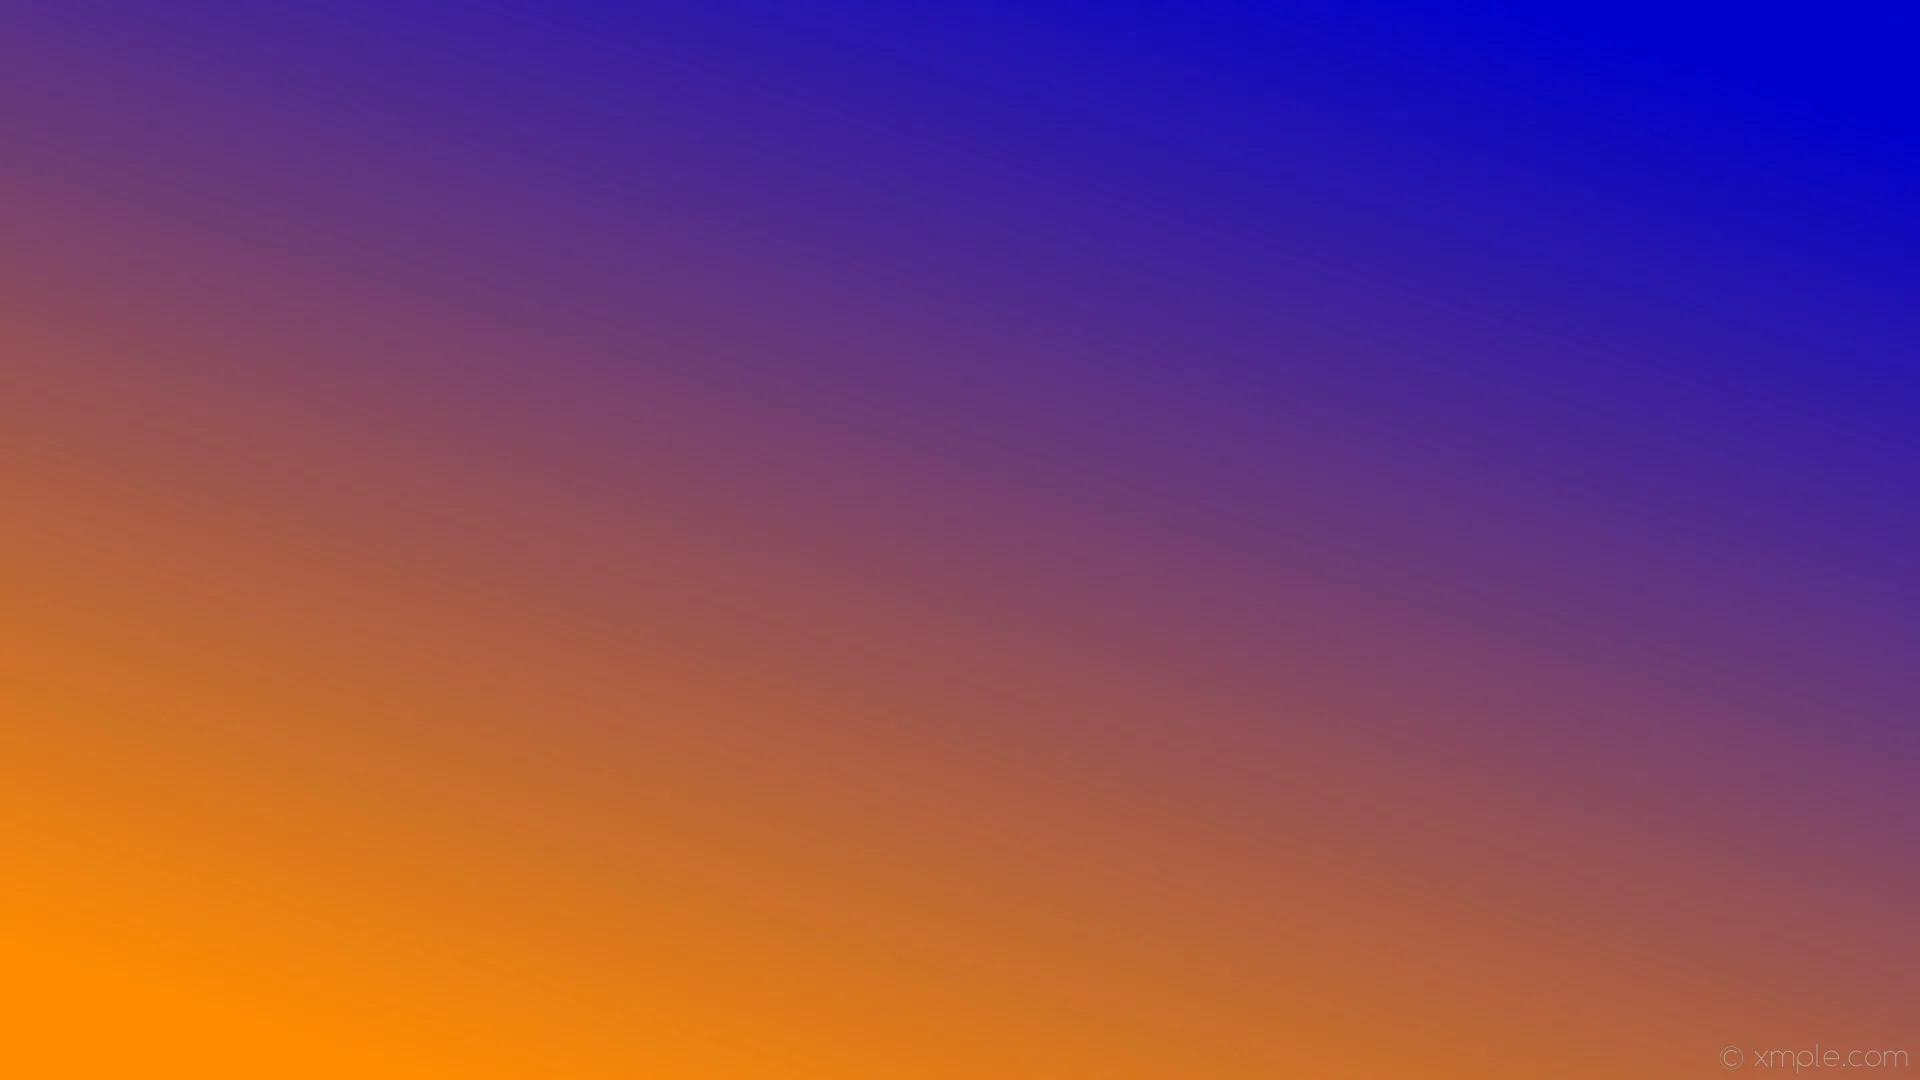 Wallpaper orange blue gradient linear medium blue dark orange cd #ff8c00 45